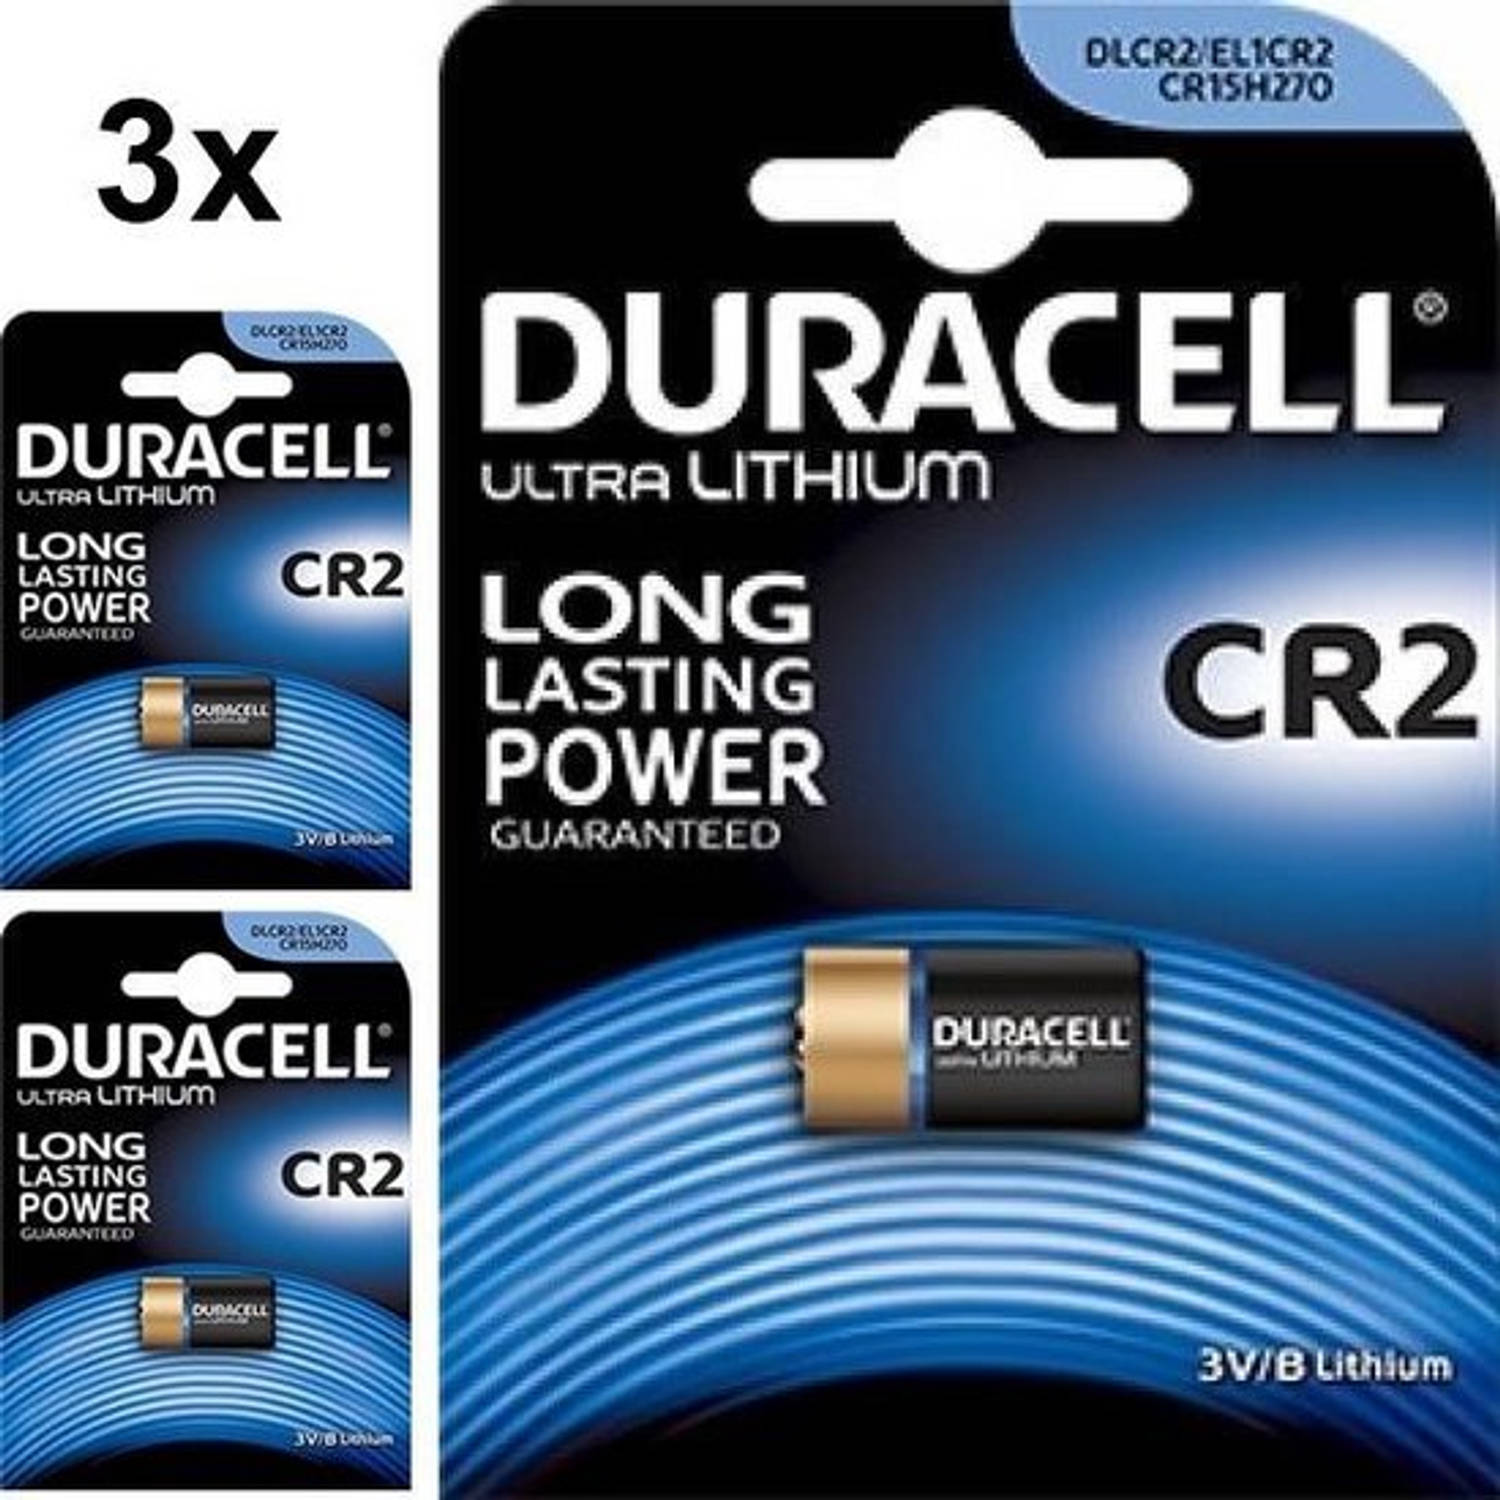 3 Stuks - Duracell CR2 EL1CR2 RLCR2 DR2R 3V Lithium batterij